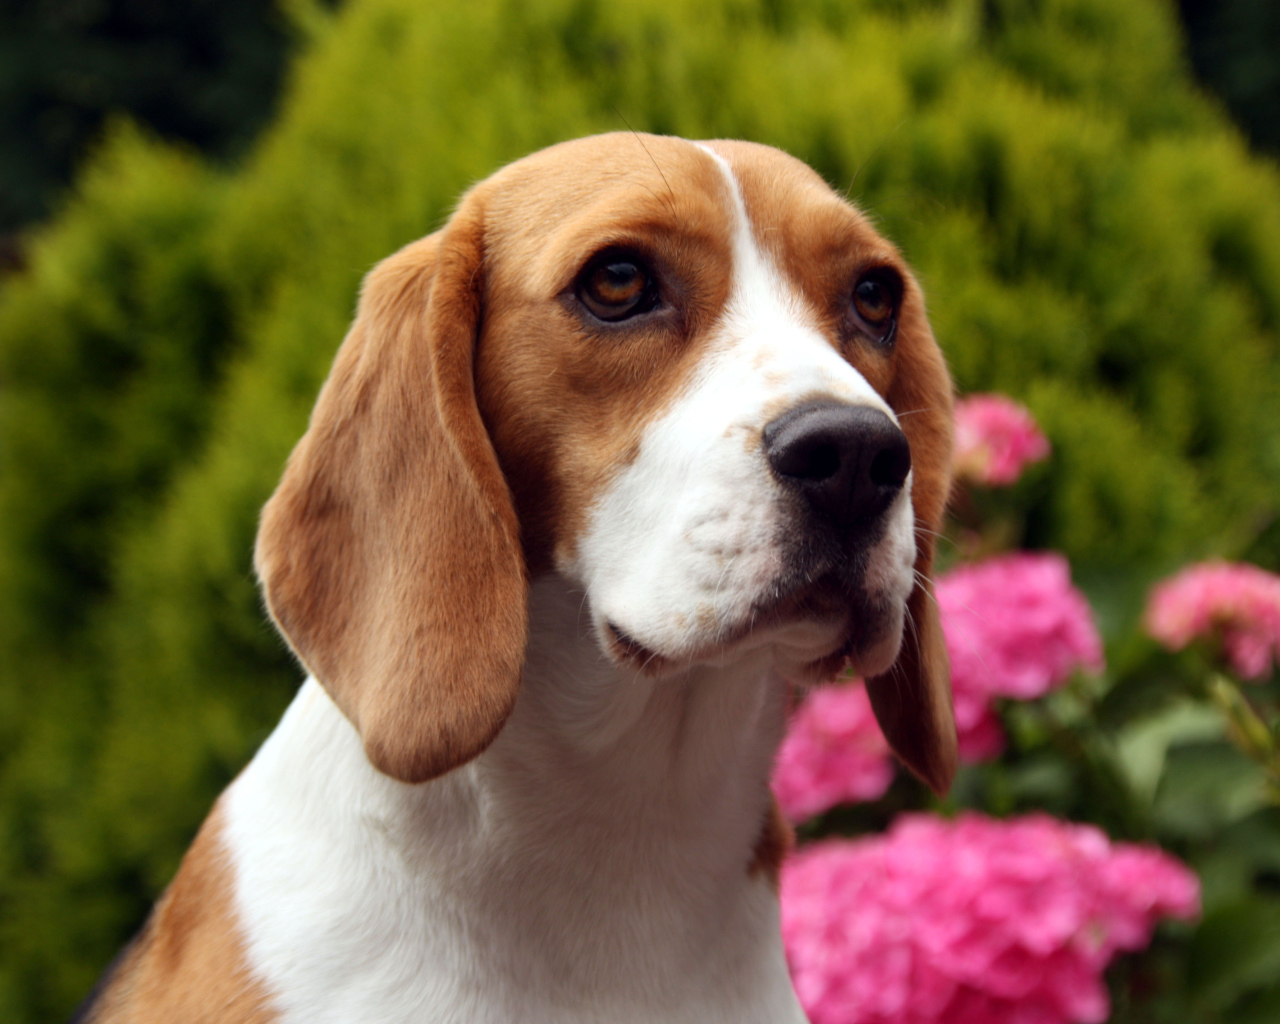 Sad beagle dog on a background of flowers